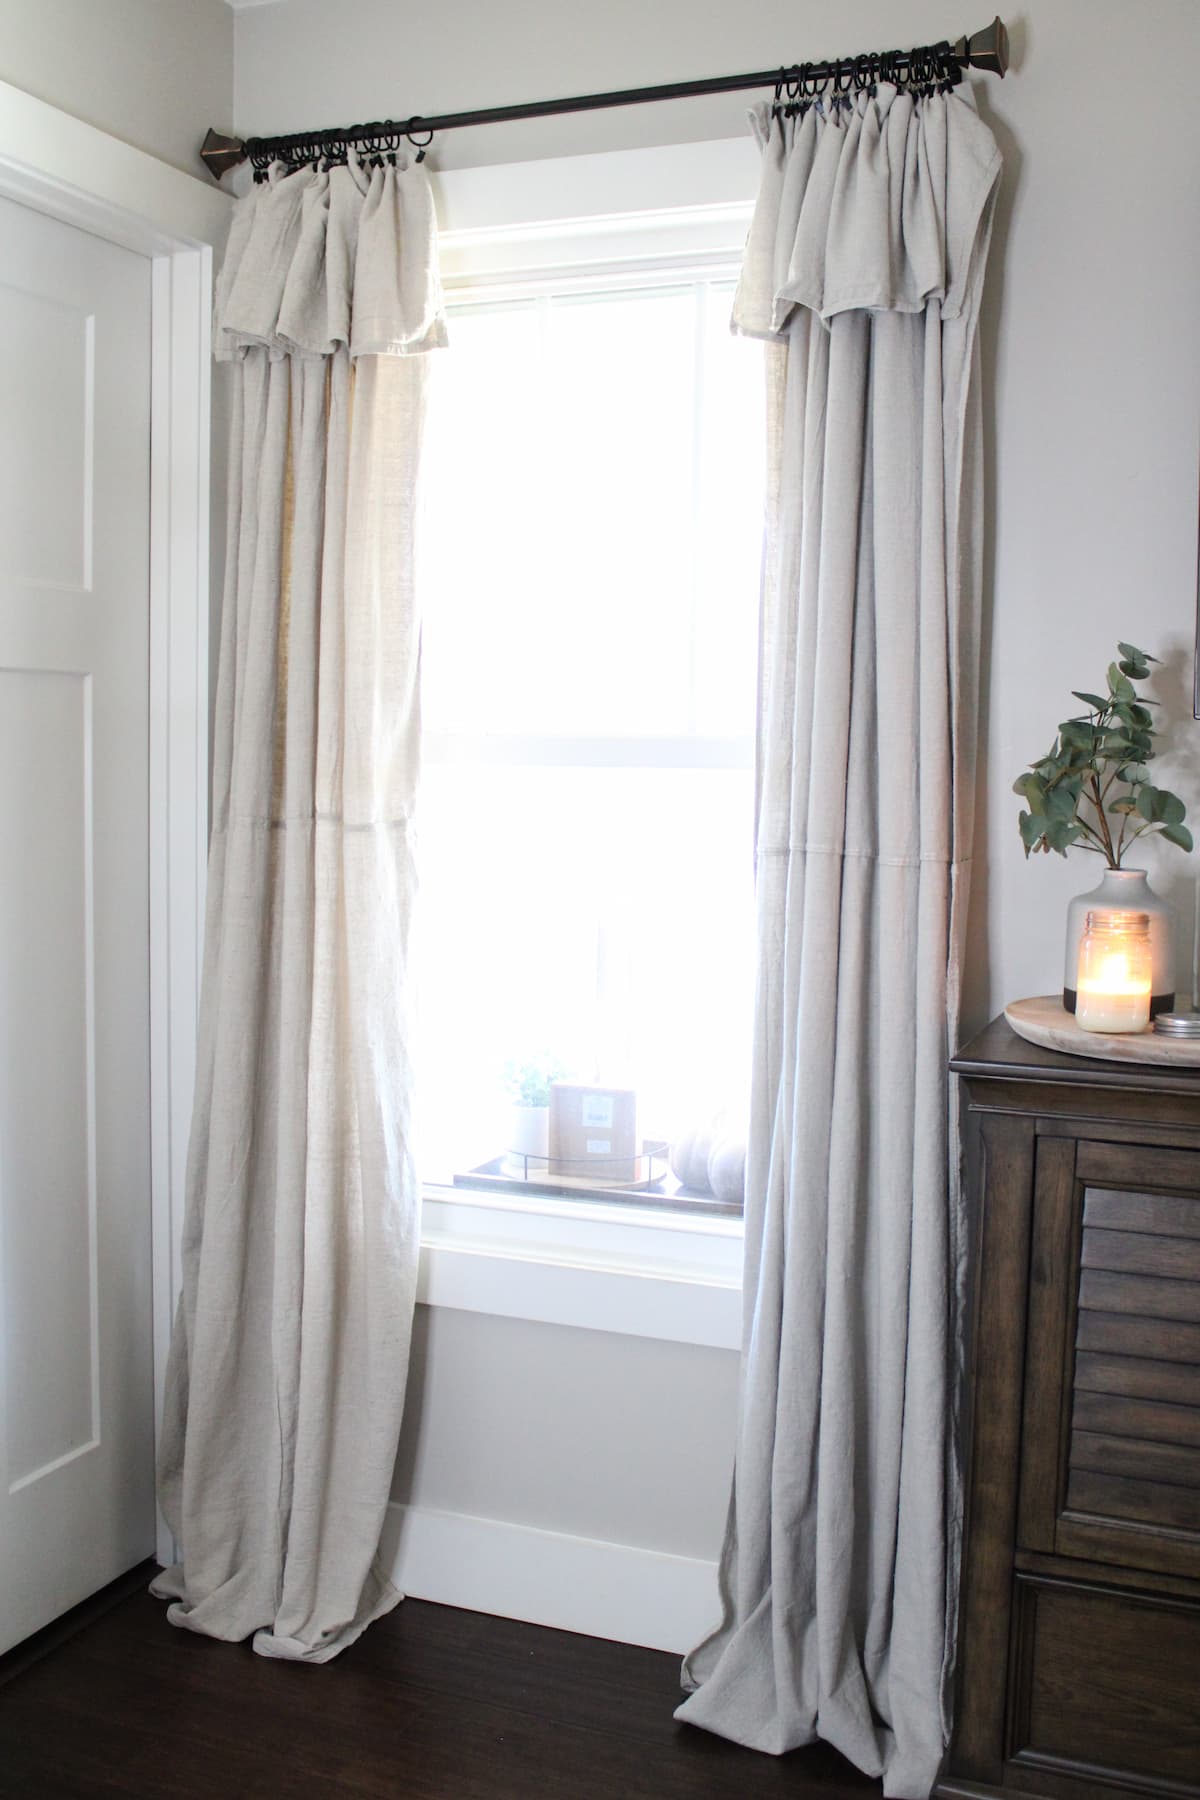 curtains on window